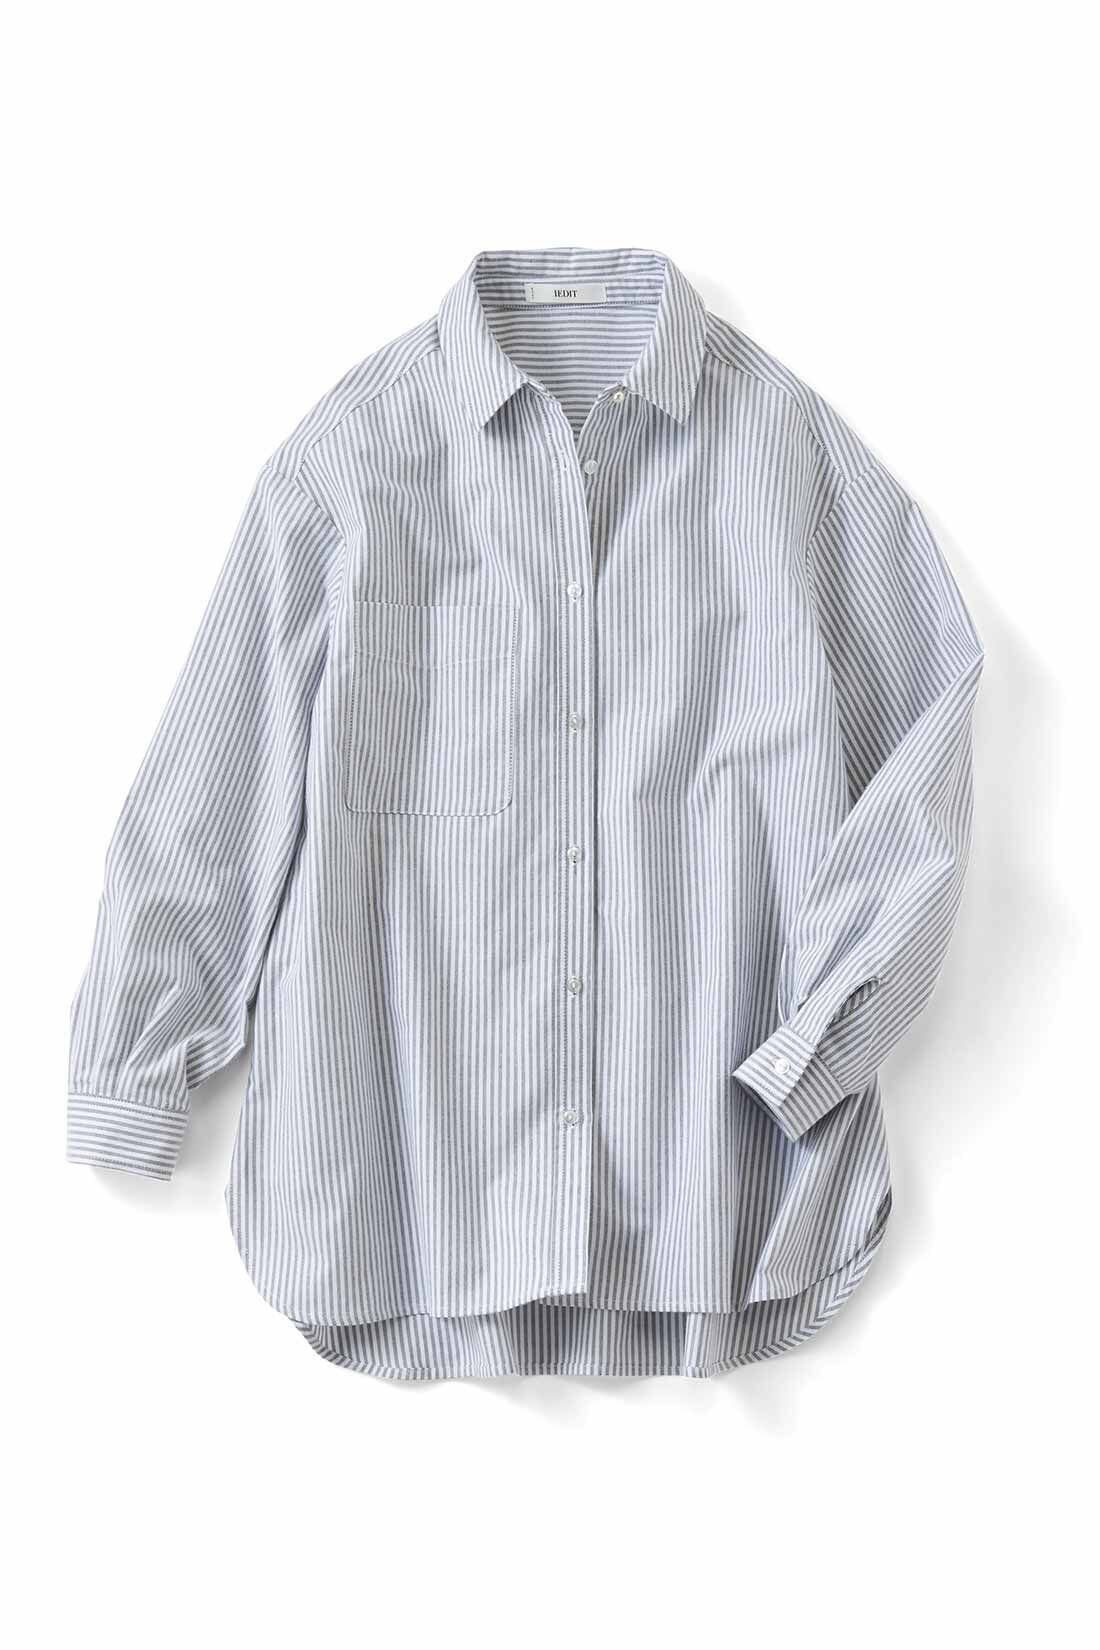 IEDIT|IEDIT[イディット]　バックフレアーデザインがきいた オックスフォード素材のこなれ見えシャツ〈パープル〉|グレー